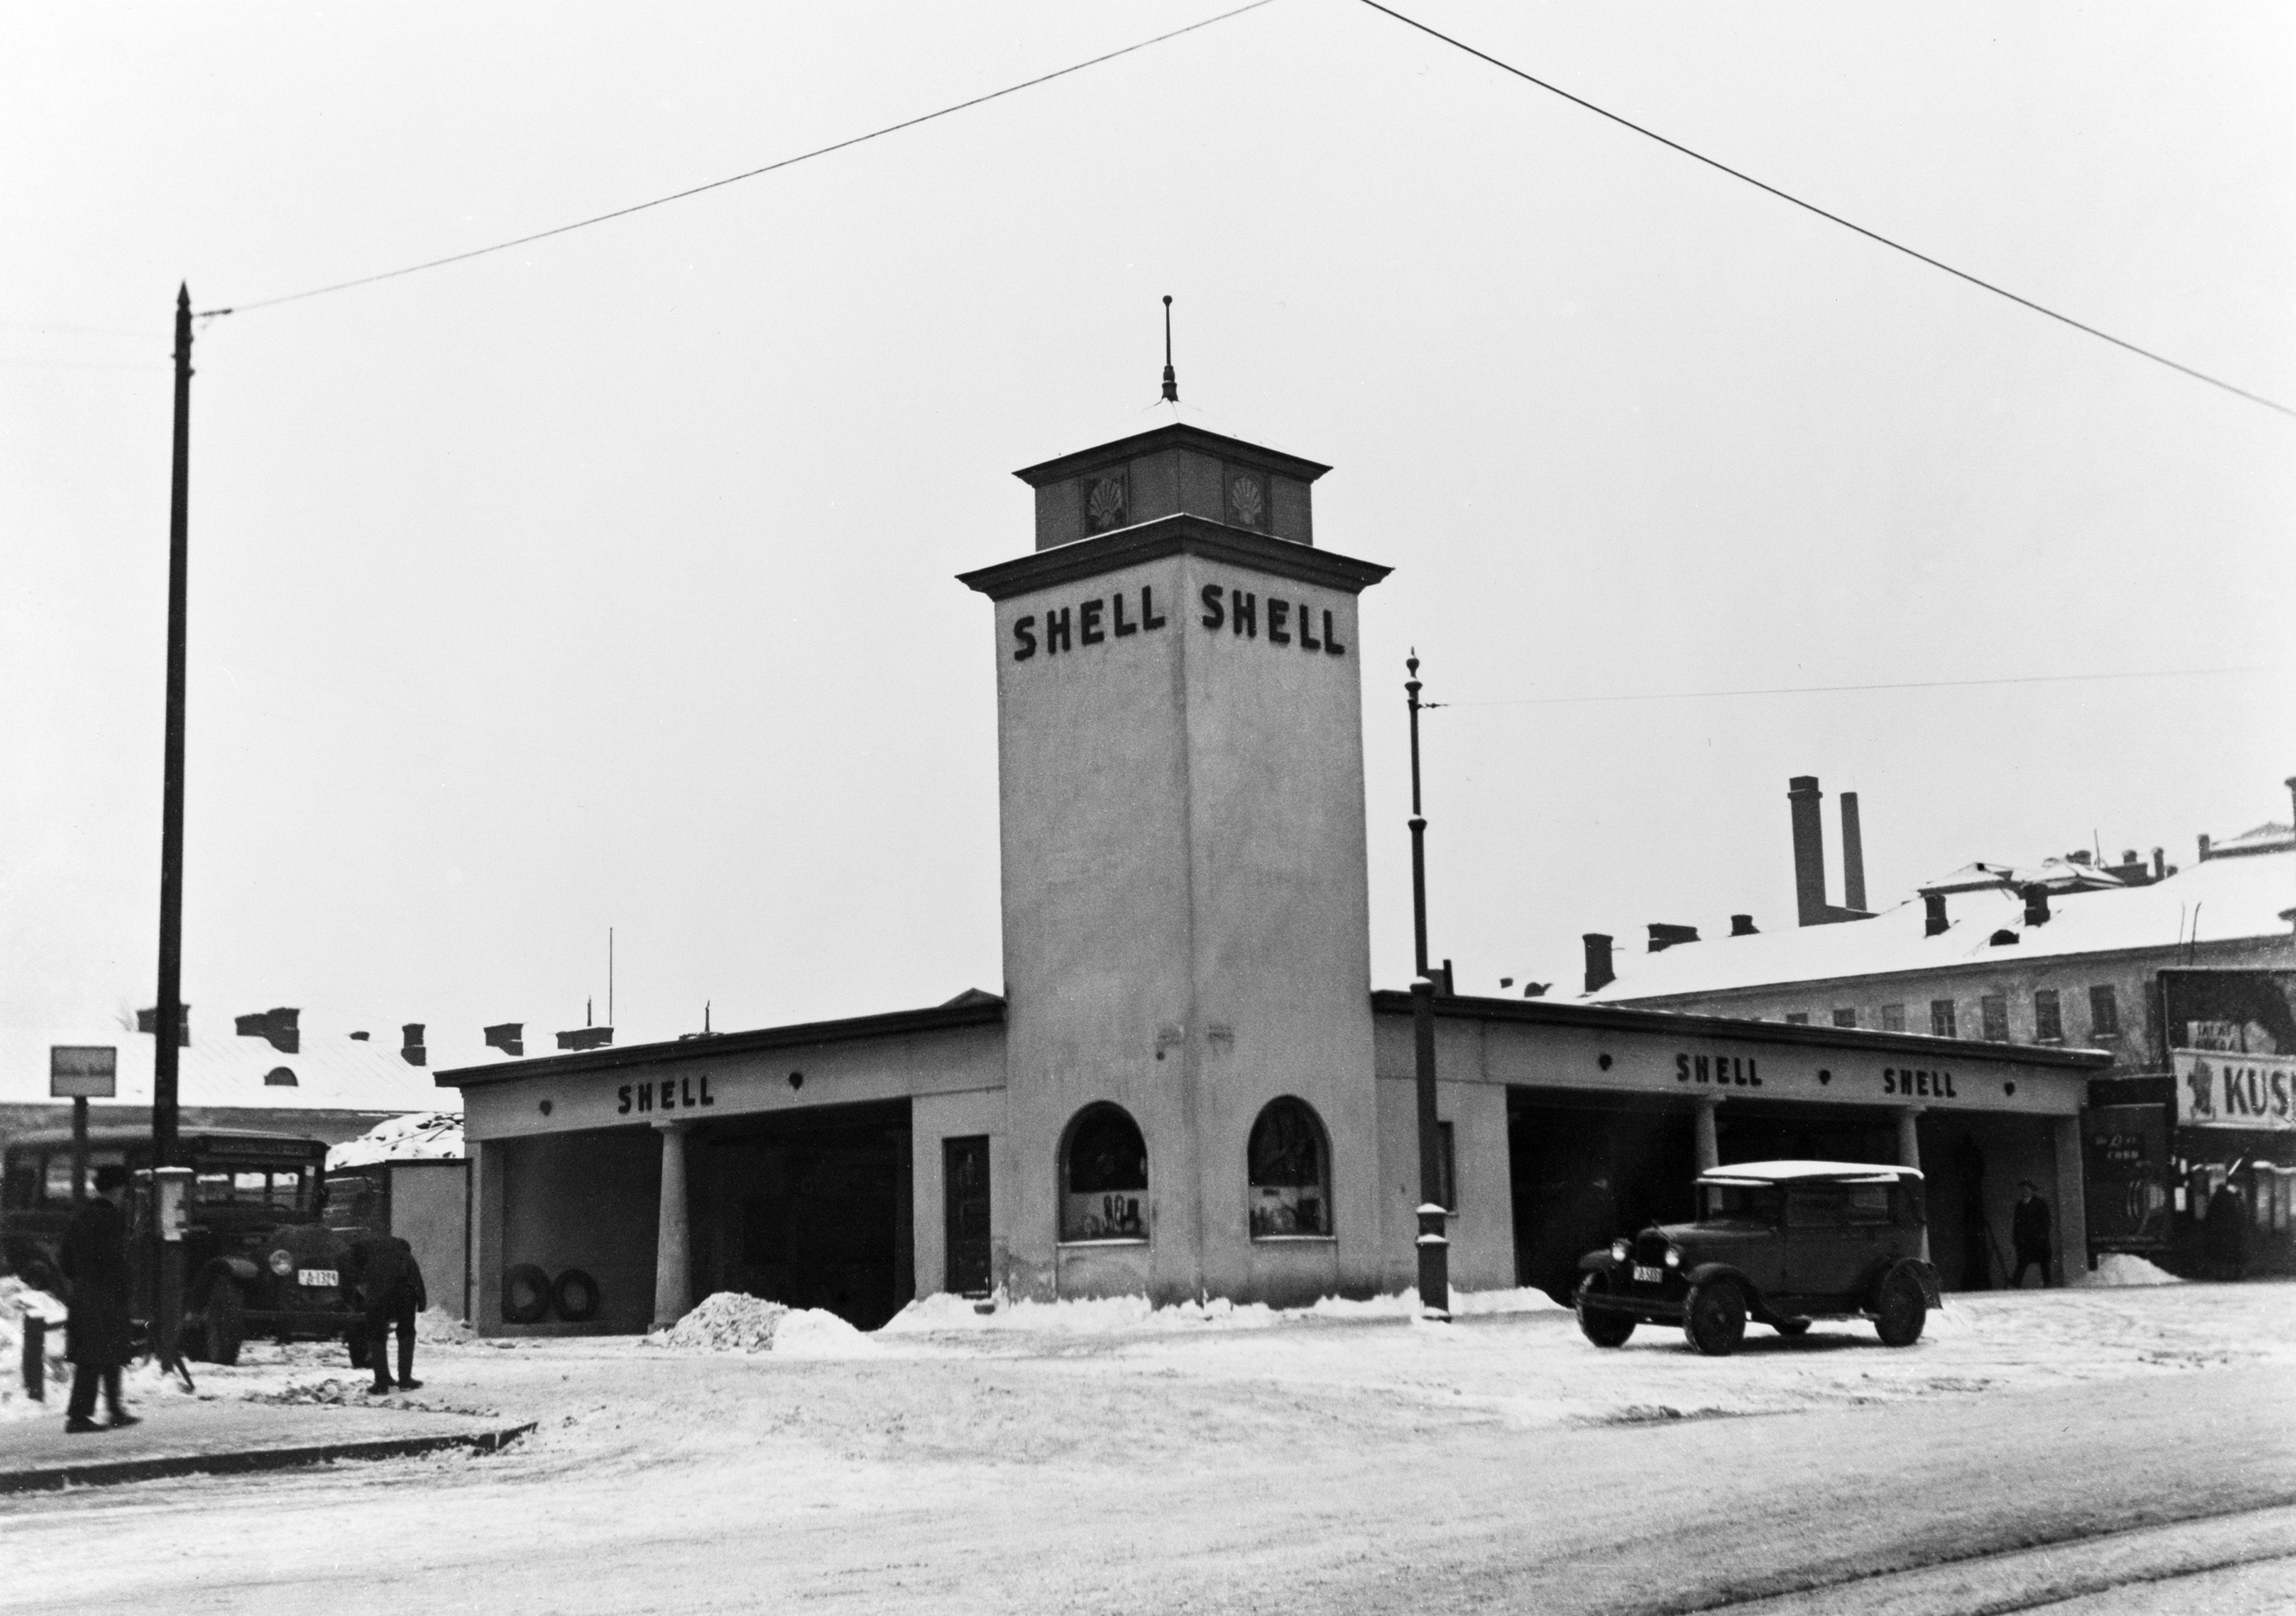 Oy Shell Ab:n huoltoasema, Turun kasarmi, Simonkatu 1 - Heikinkatu 28 (Mannerheimintie 22-24). Rakennettu 1928, purettu 1934.